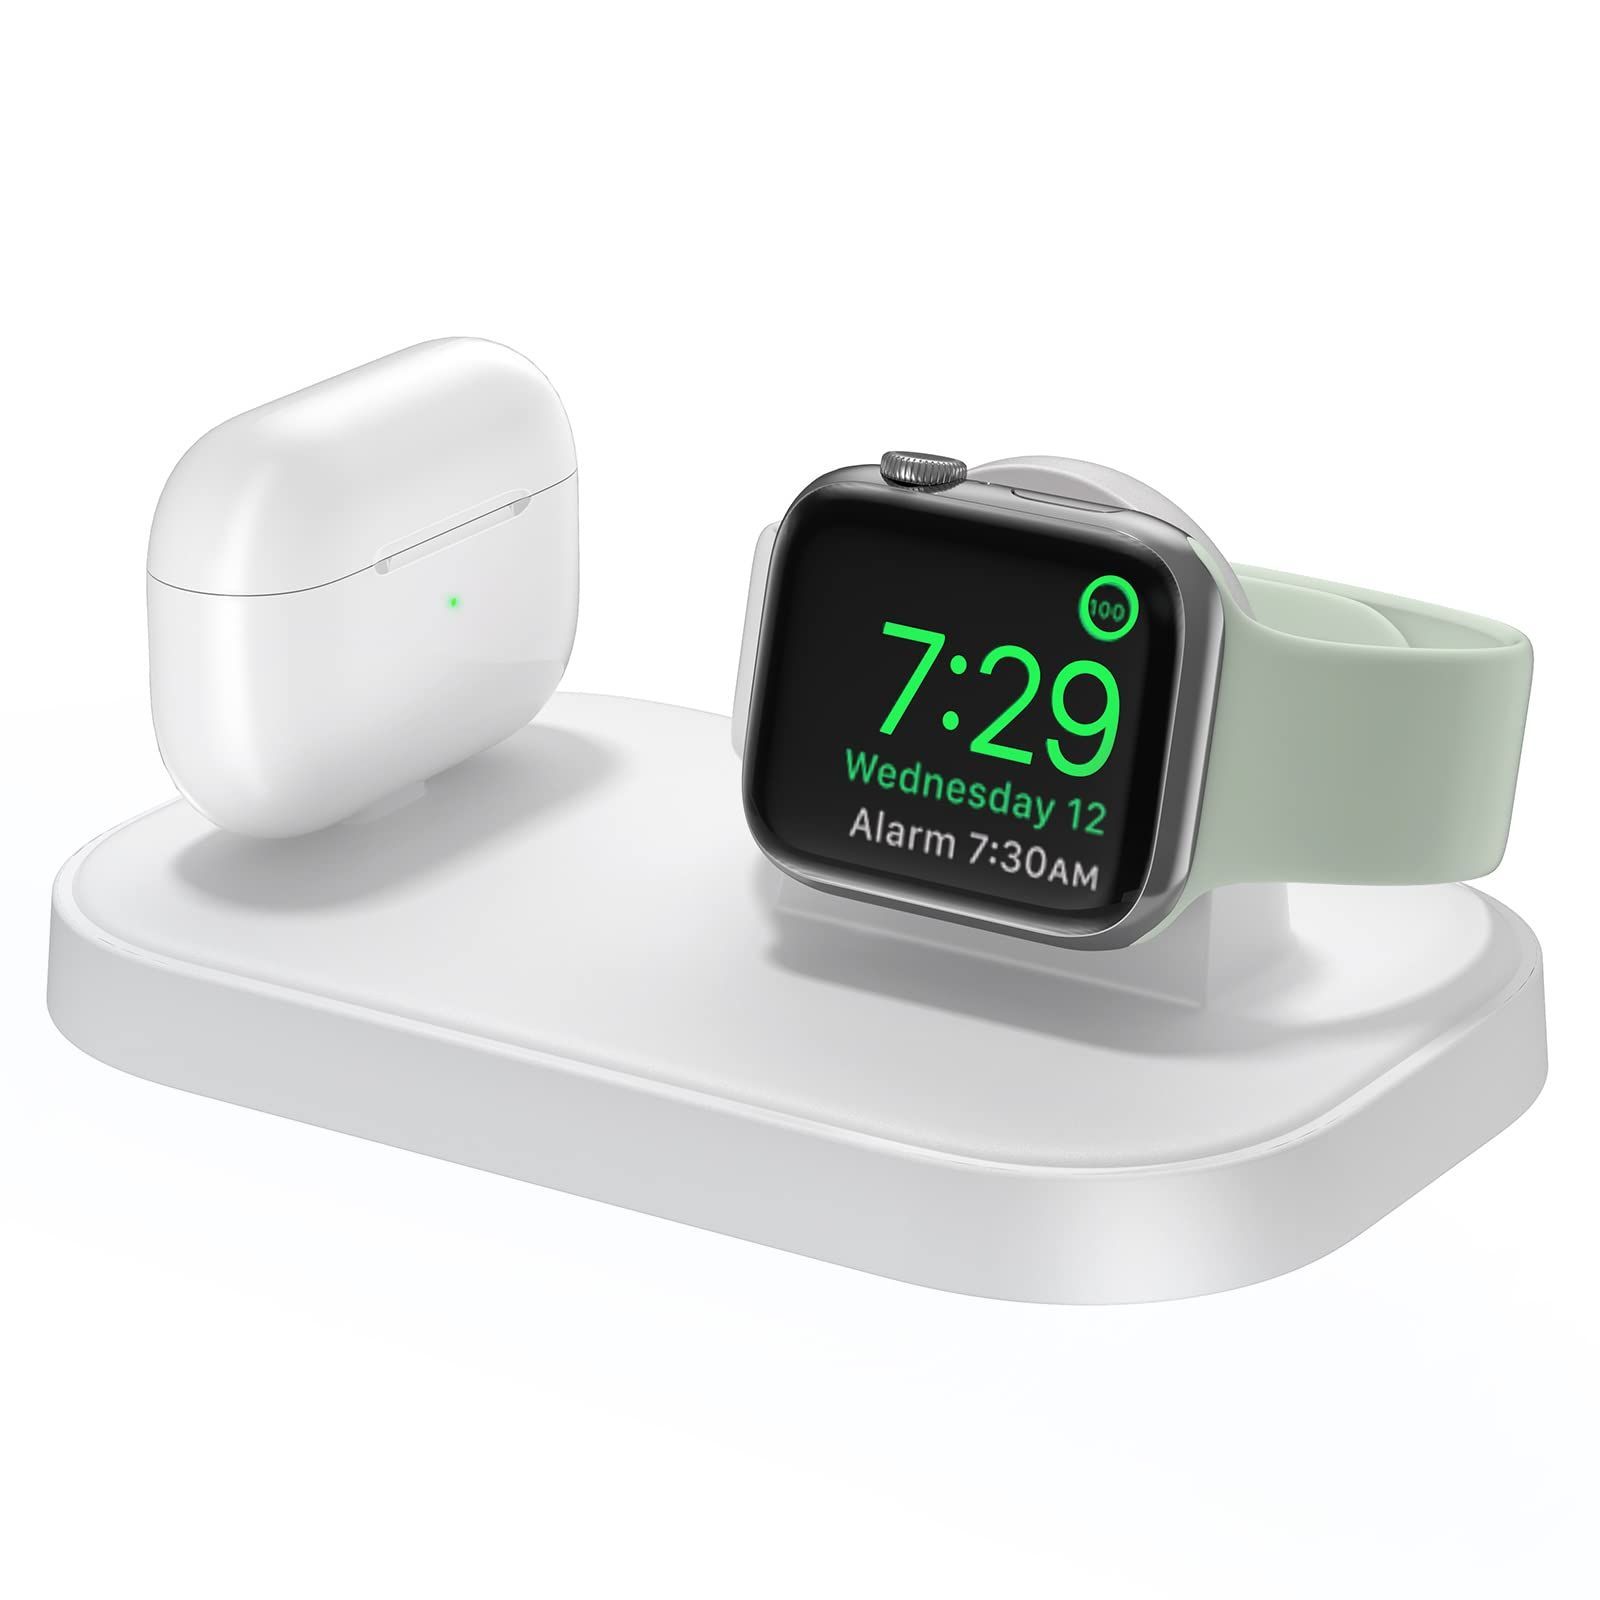 2in1 Apple watch アップルウォッチ充電器